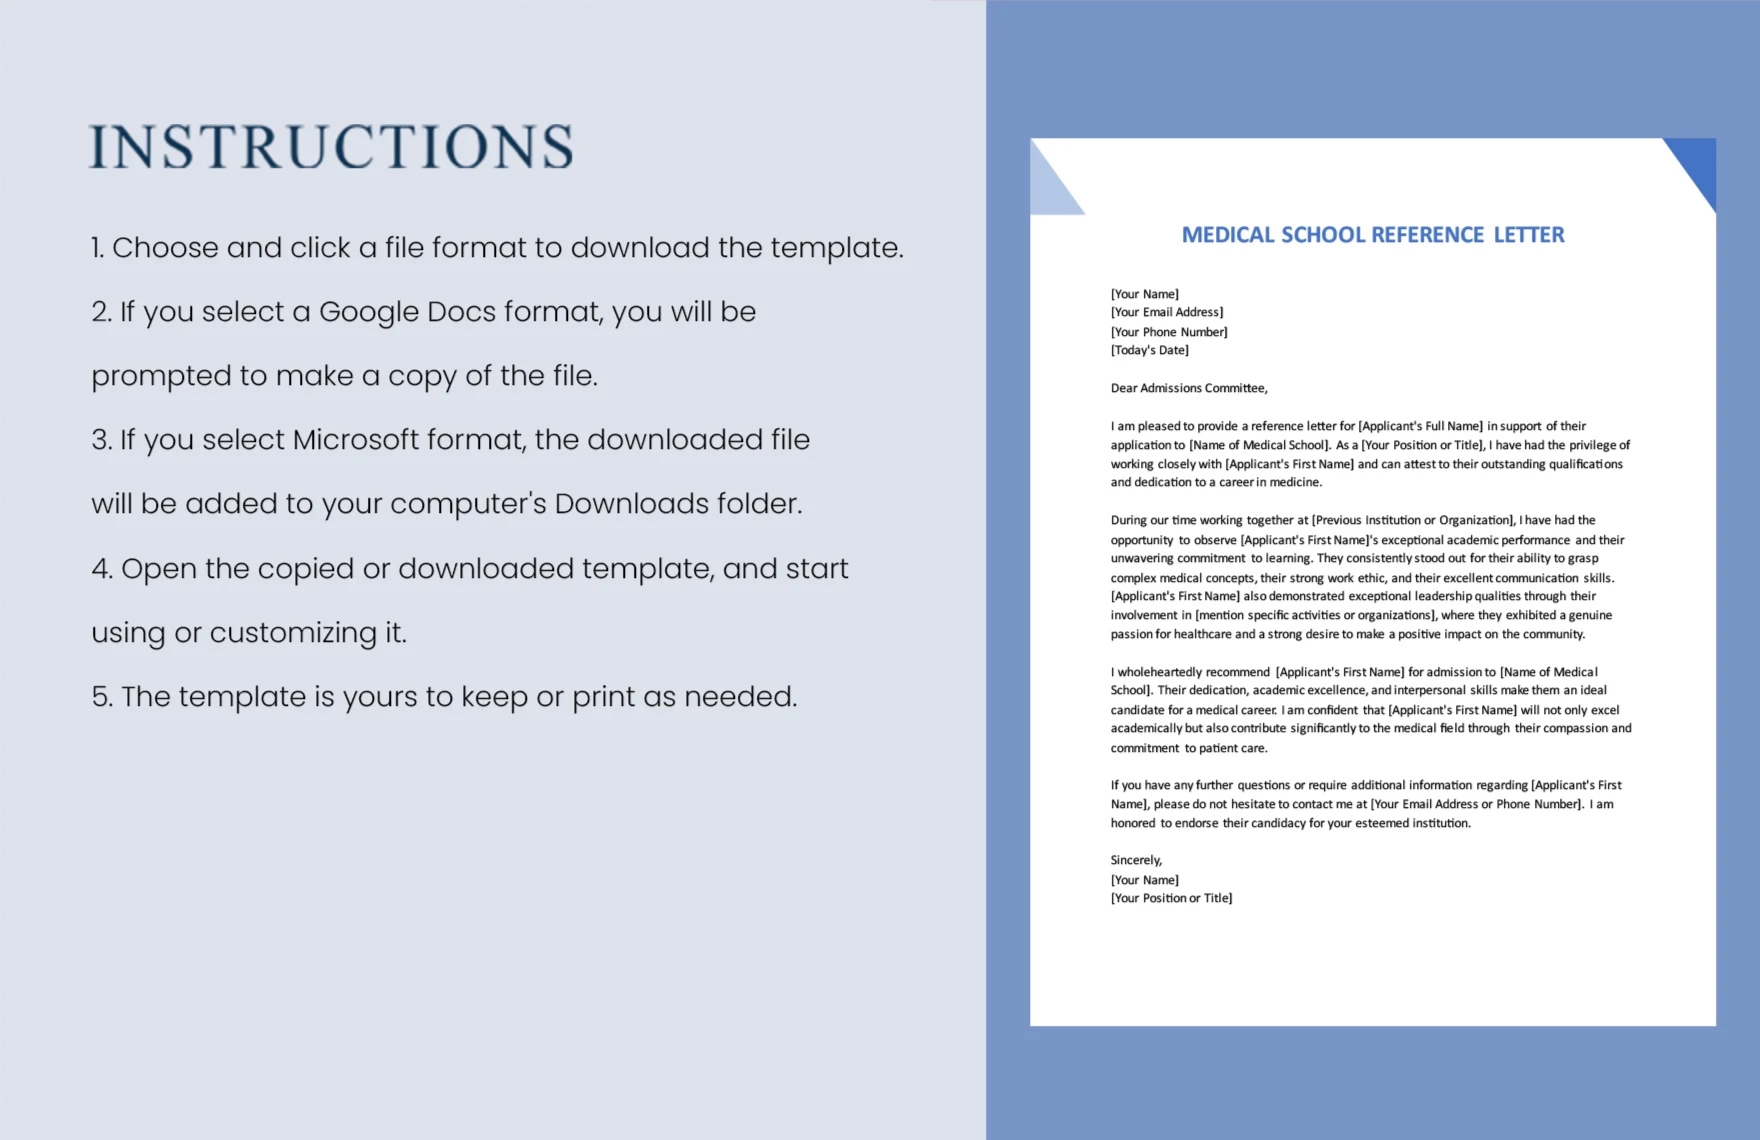 Medical School Reference Letter